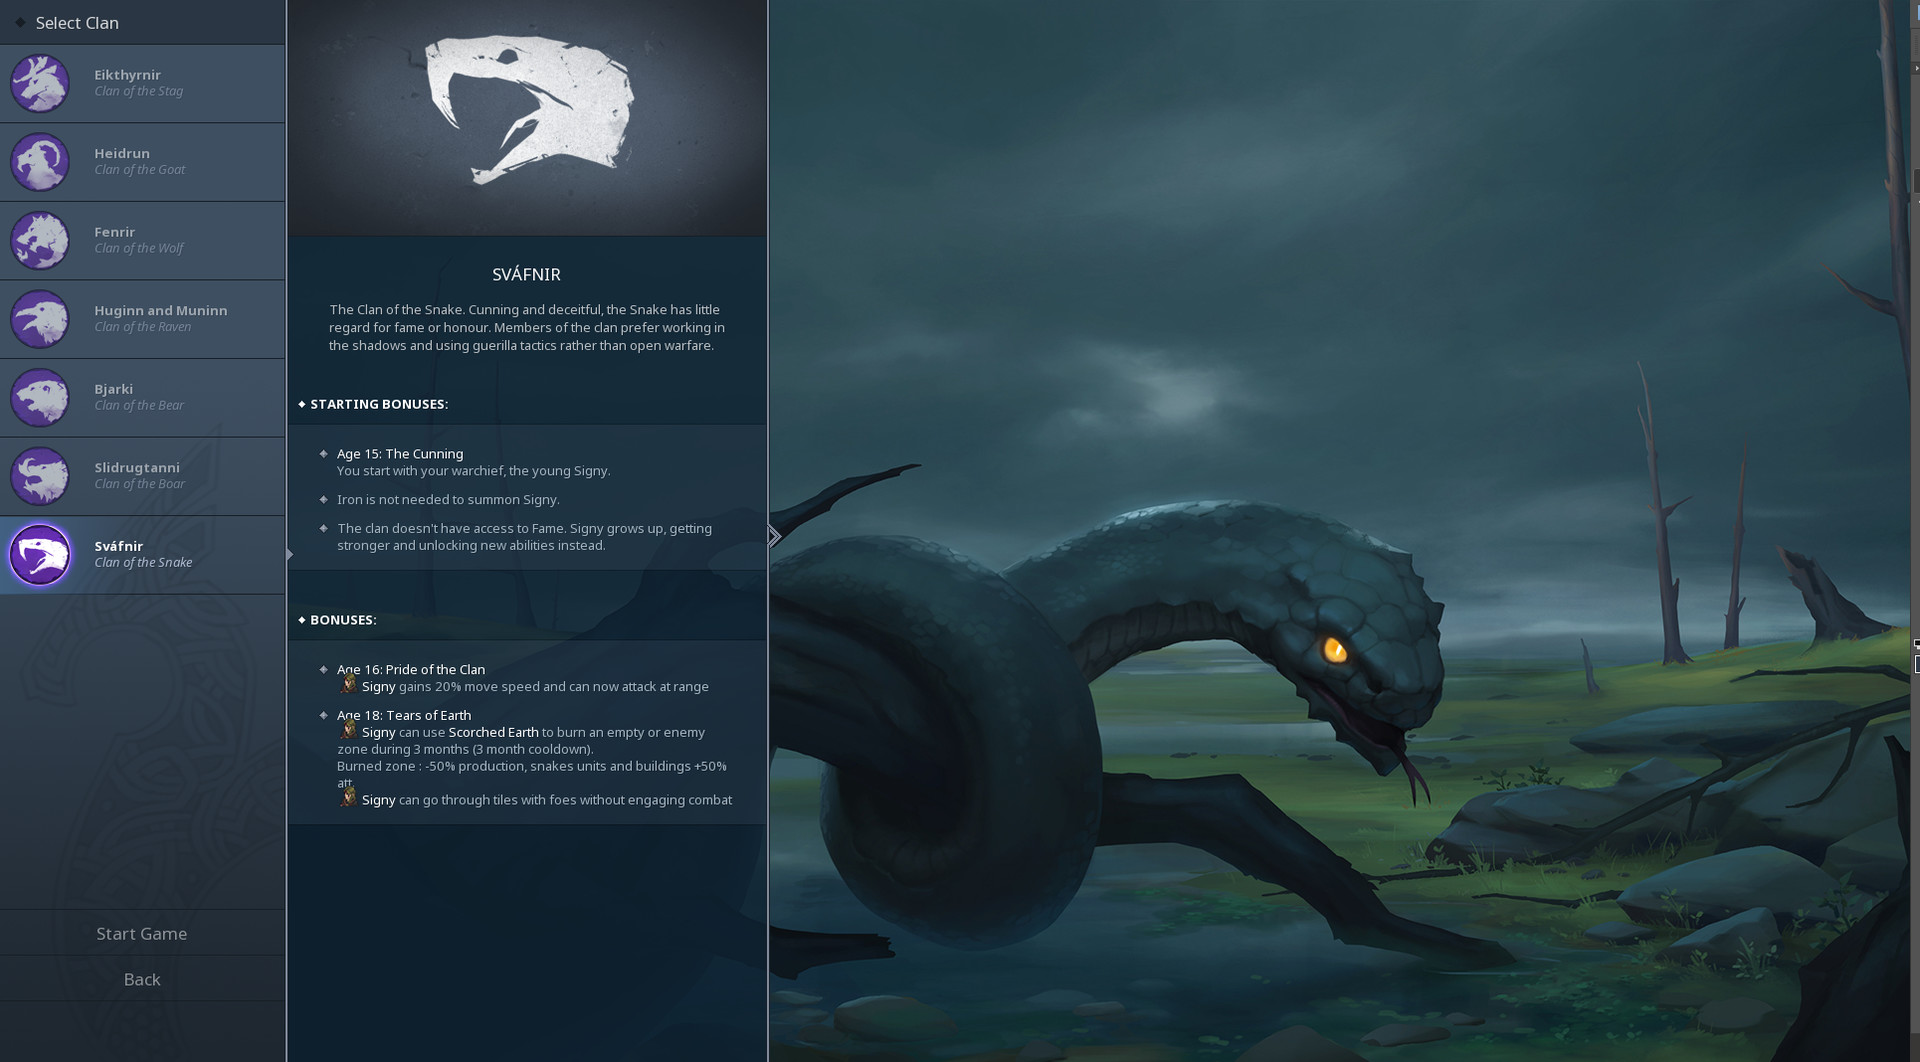 Northgard - Sváfnir, Clan of the Snake Featured Screenshot #1